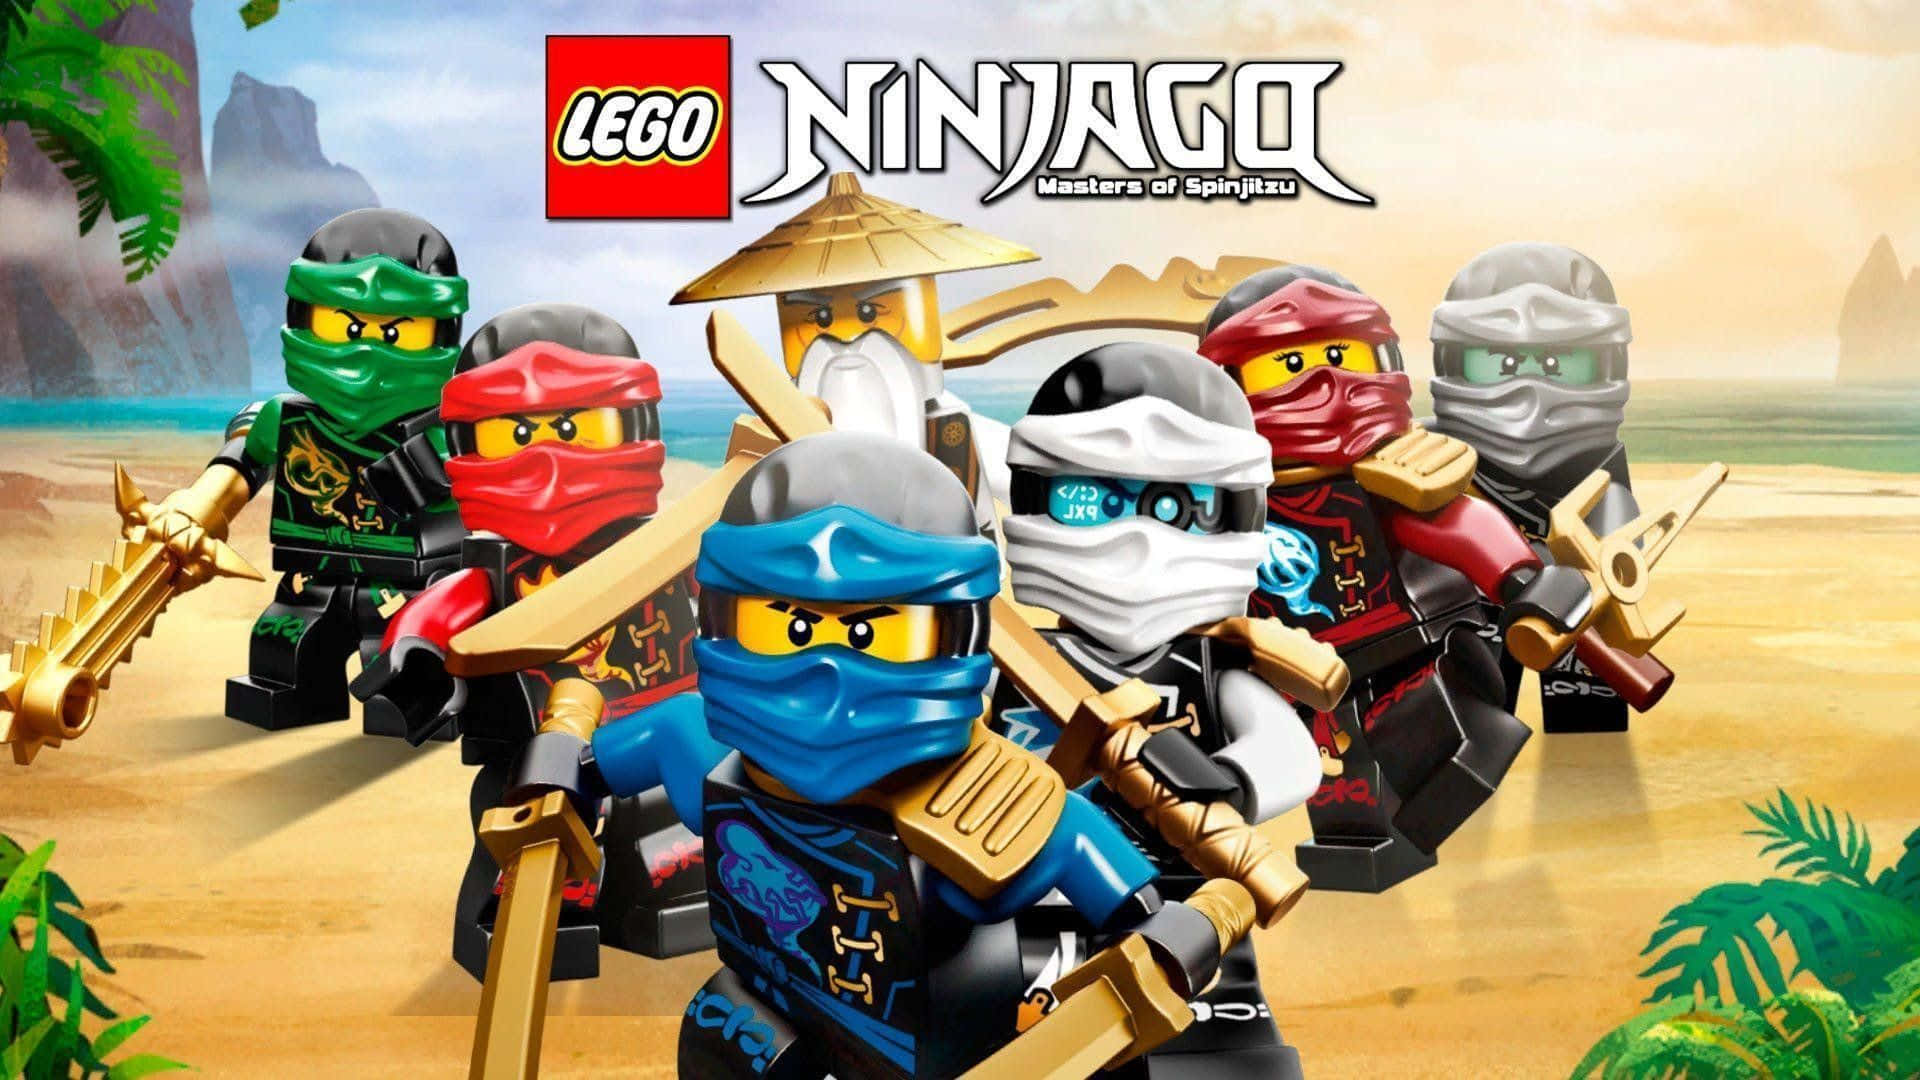 The fearless Ninjago heroes prepare for an intense battle.